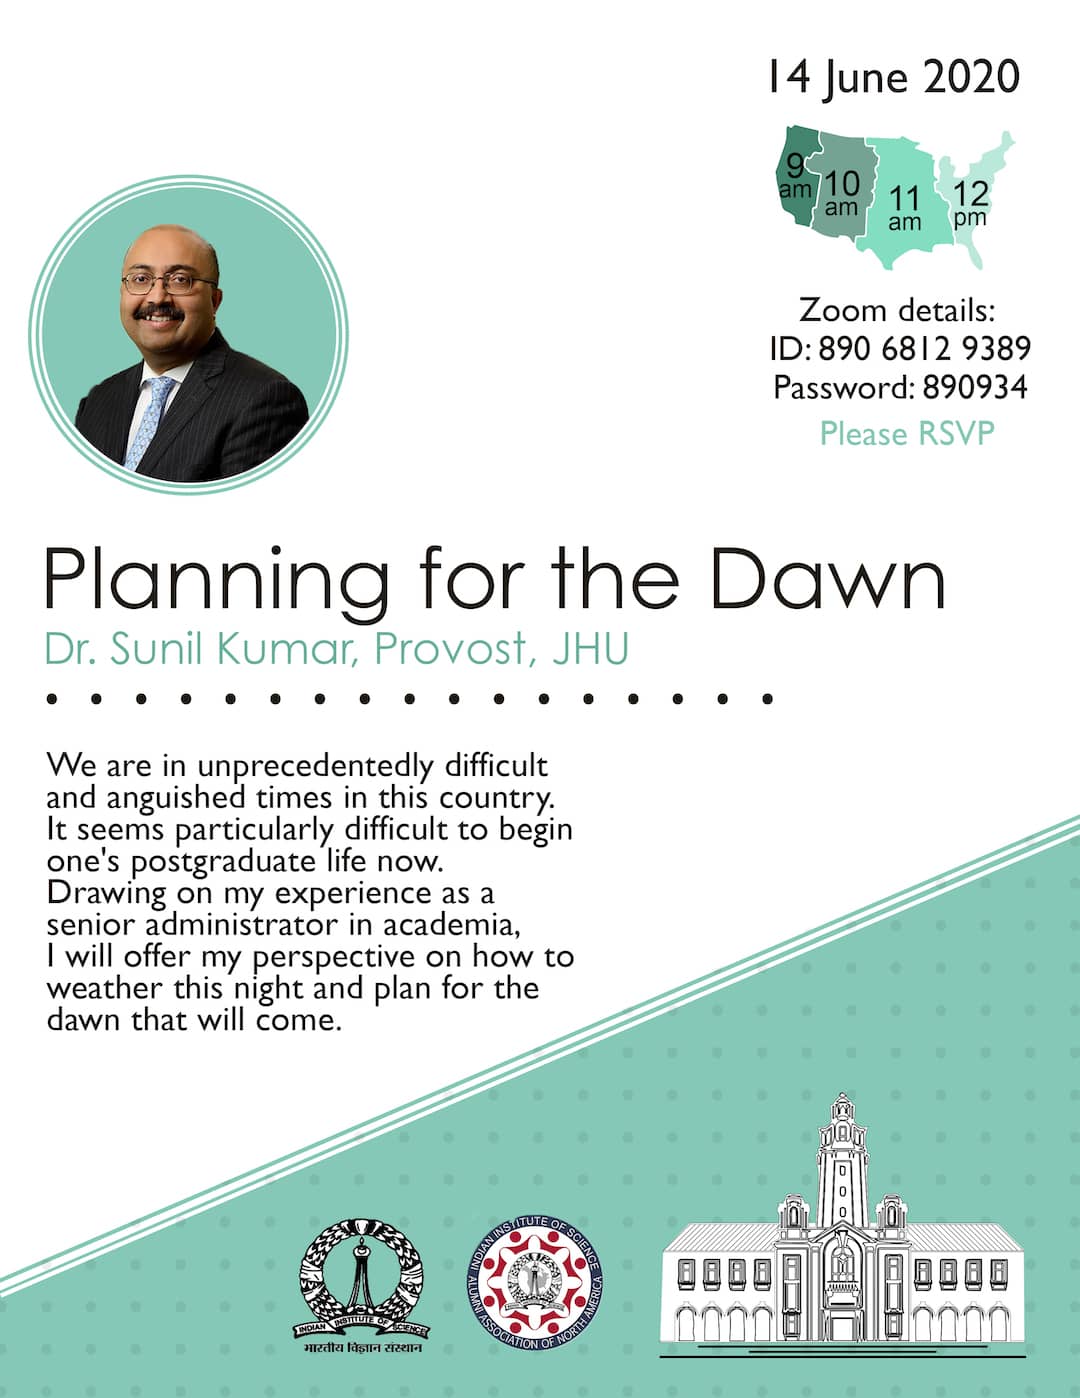 "Planning for the Dawn" - Dr. Sunil Kumar Flyer